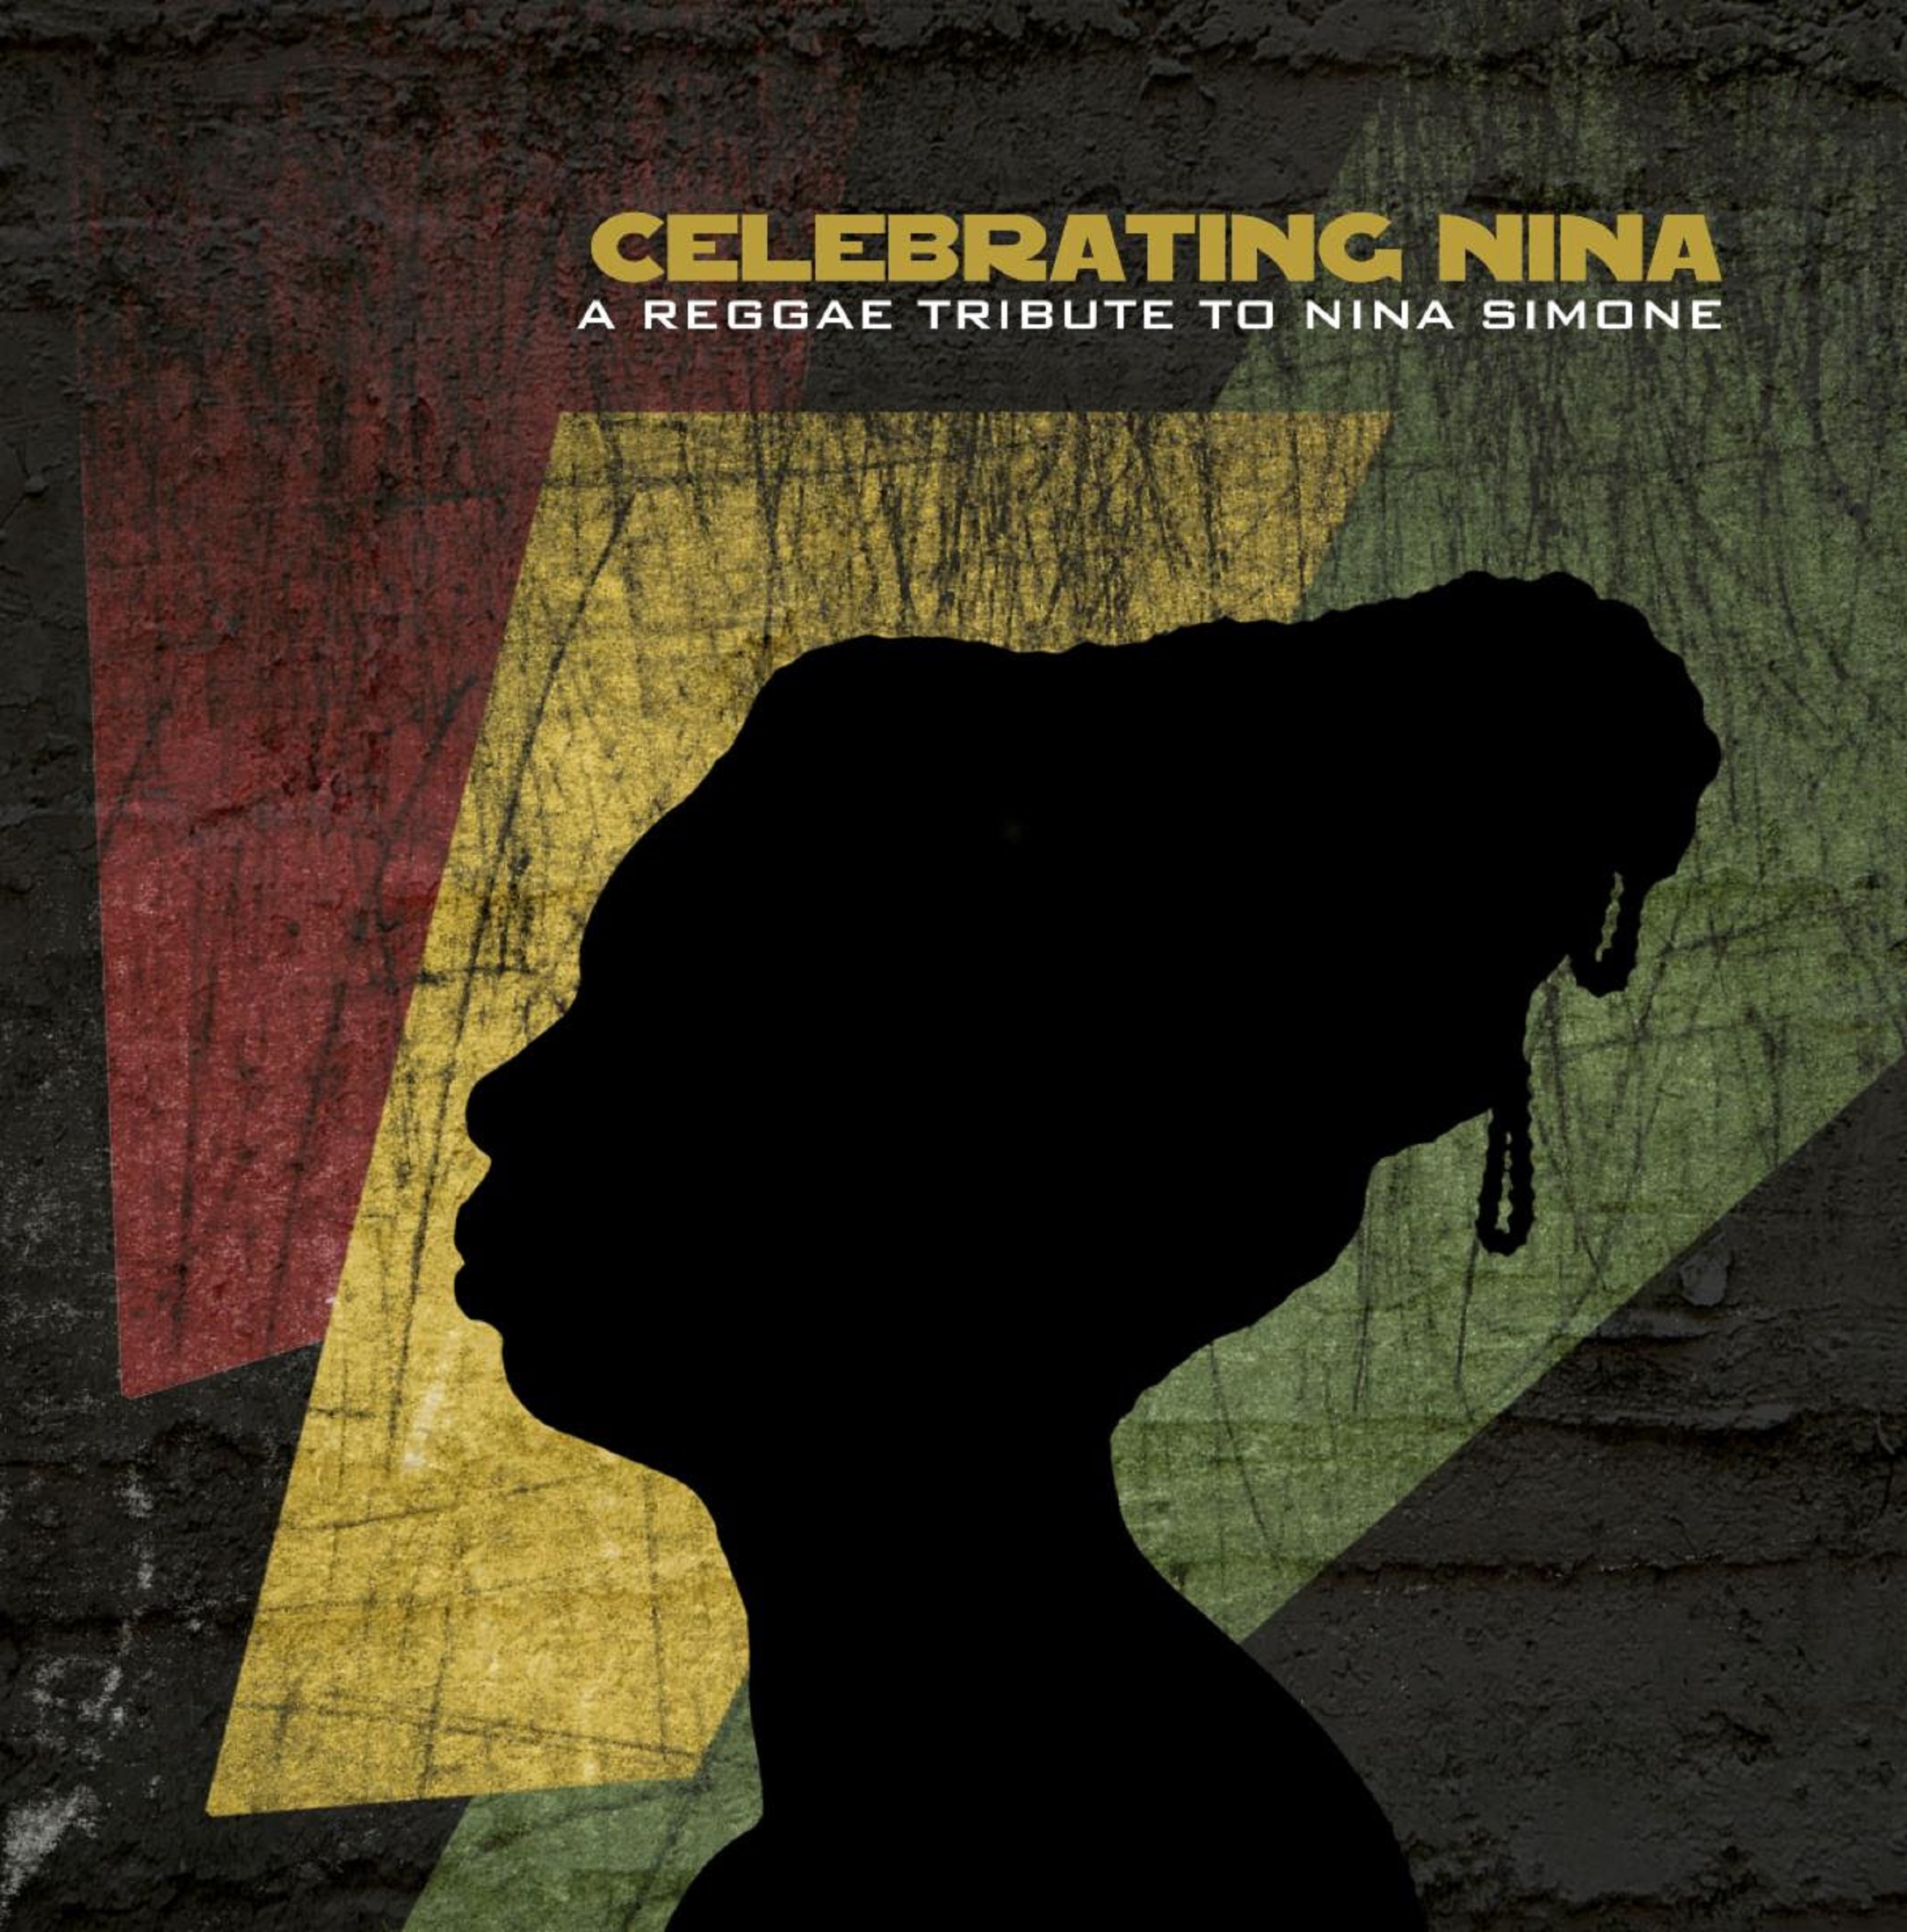 Stephen Marley Releases New EP Celebrating Nina: A Reggae Tribute to Nina Simone